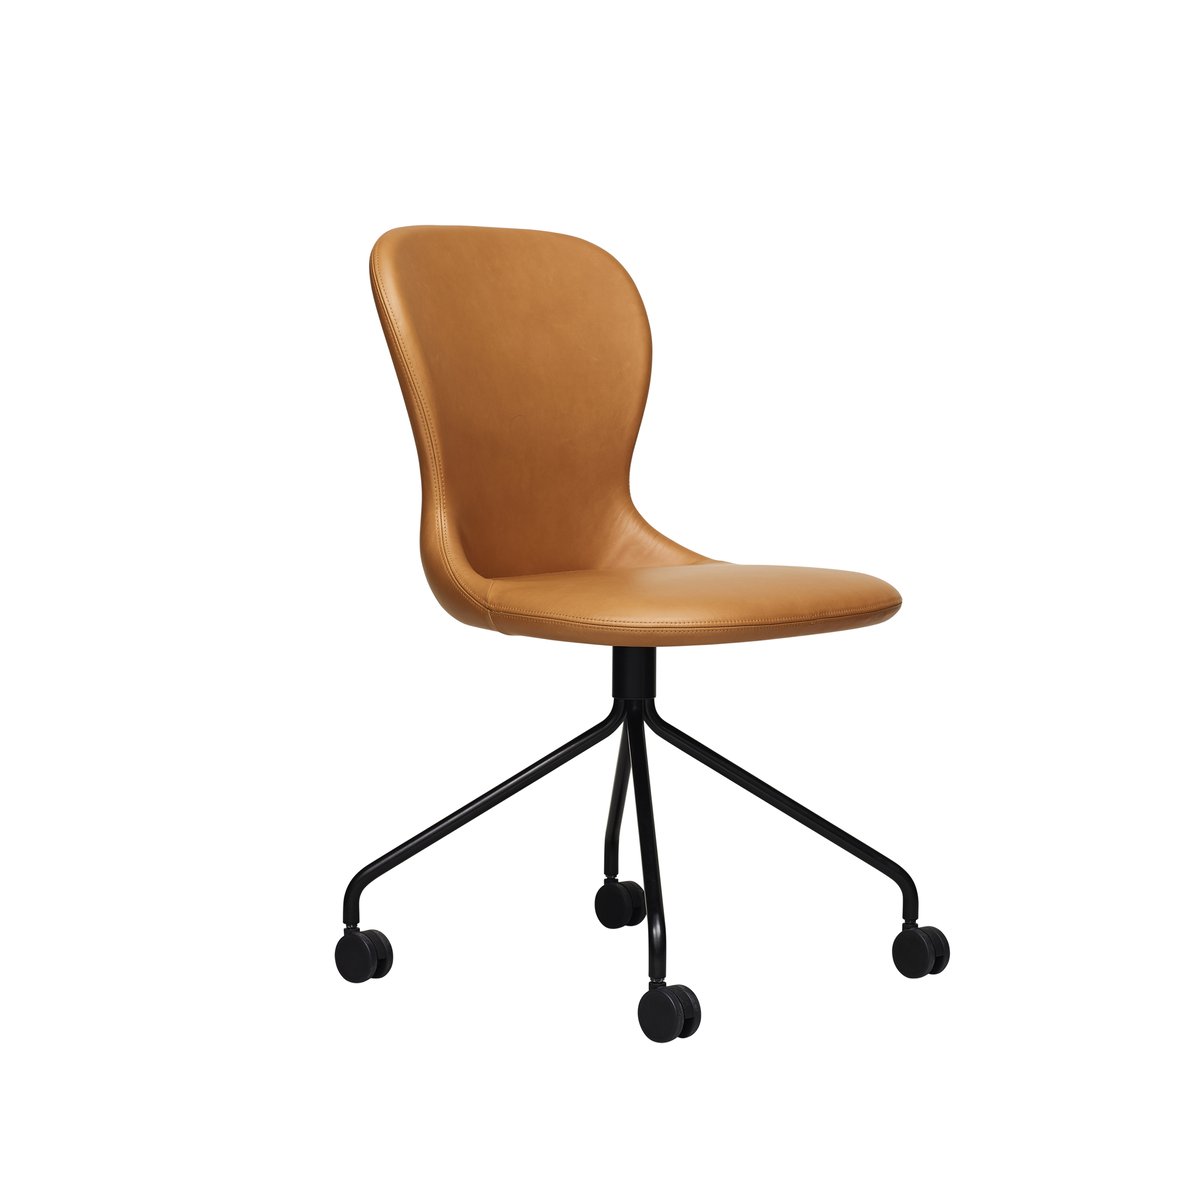 Fogia Myko kontorsstol läder shade 20291 beige, svart metallben med hjul, utan armstöd